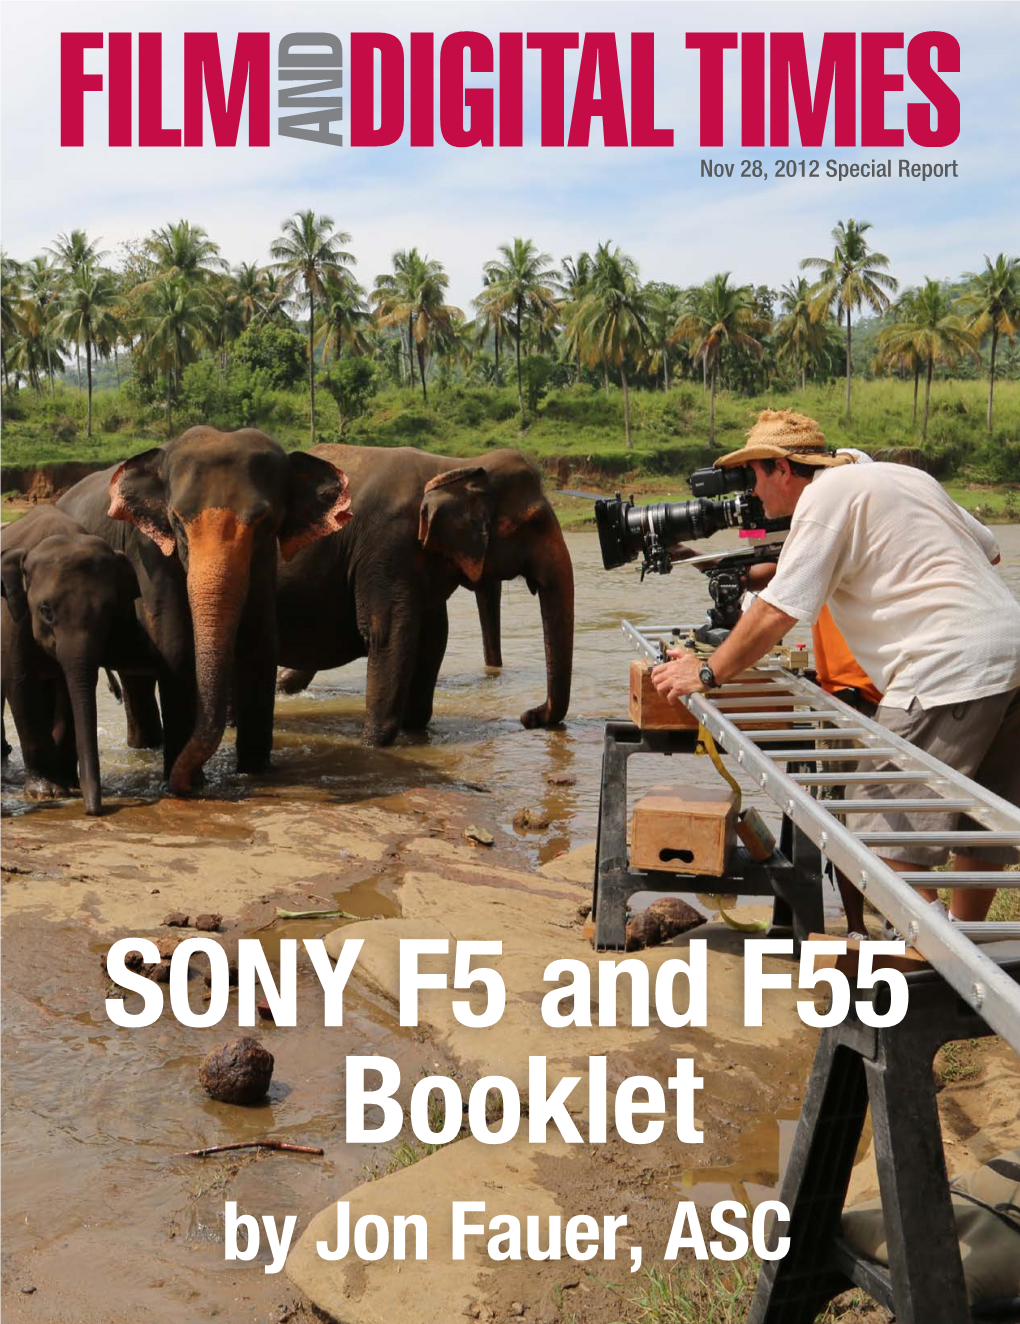 SONY F5 and F55 Booklet by Jon Fauer, ASC Dec 2012 • Sony F5 - F55 1 2 Dec 2012 • Sony F5- F55 SONY F5 and F55 Booklet by Jon Fauer, ASC